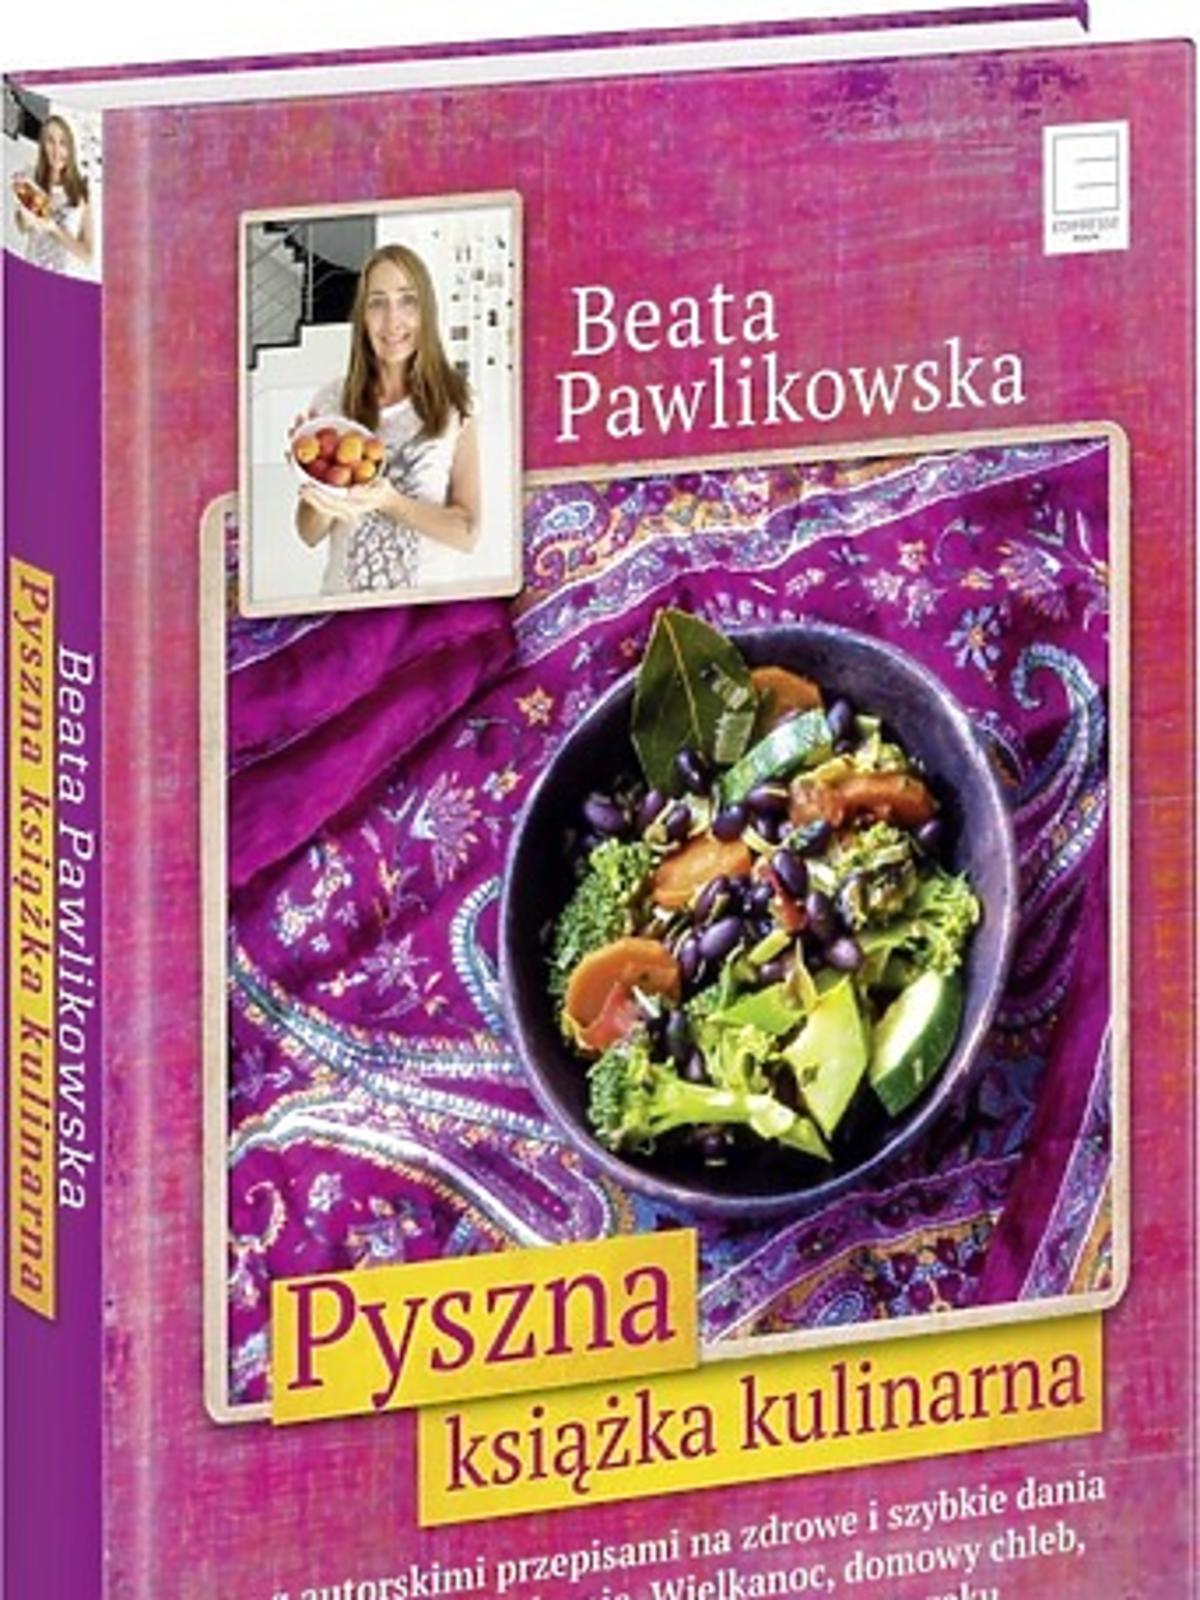 Beata Pawlikowska, „Pyszna książka kulinarna”